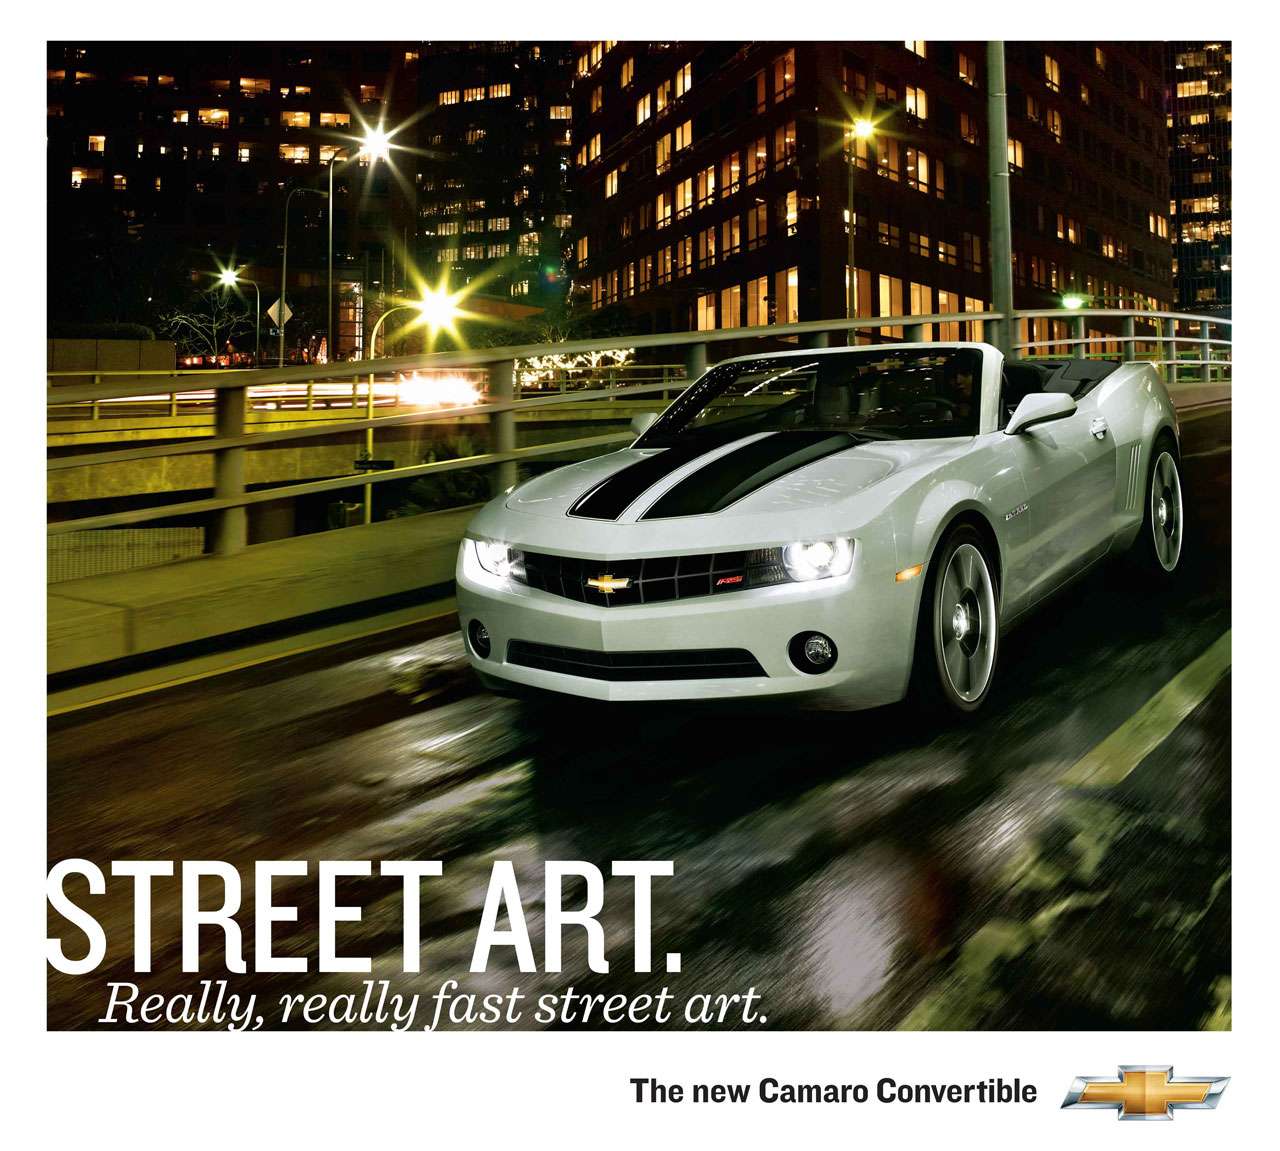 Street art. Really, really fast street art. The new Chevrolet Camaro Convertible.